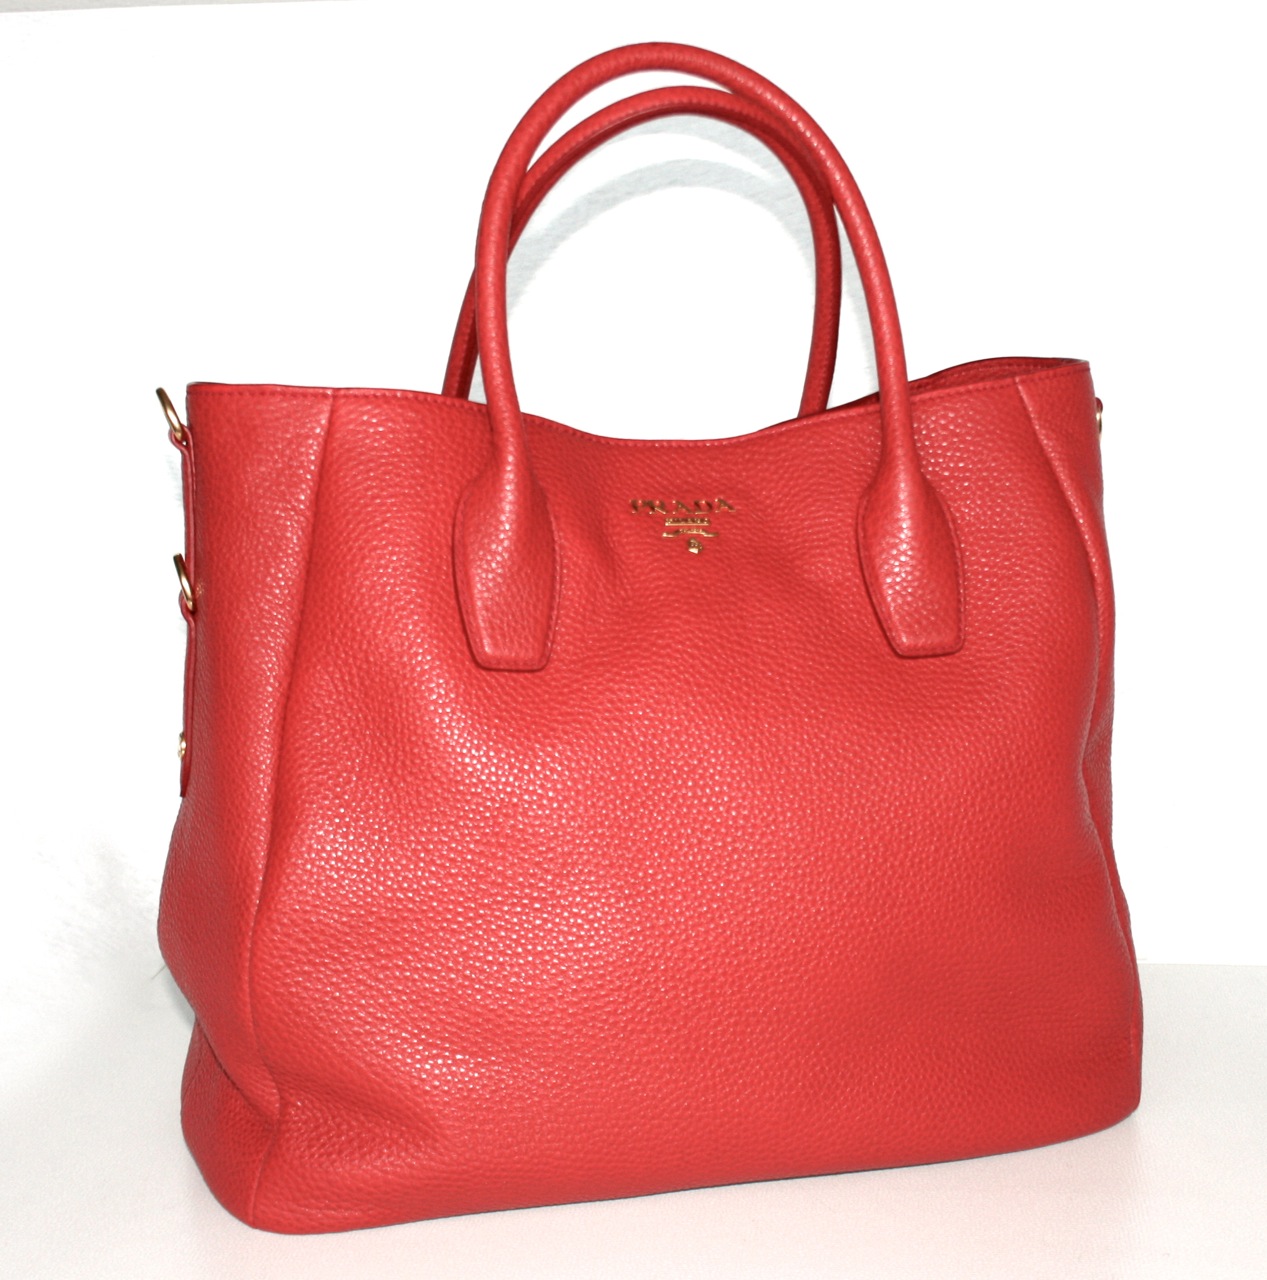 Authentic Luxury Prada Shopper Bag Handbag BN2537 Red New | eBay  